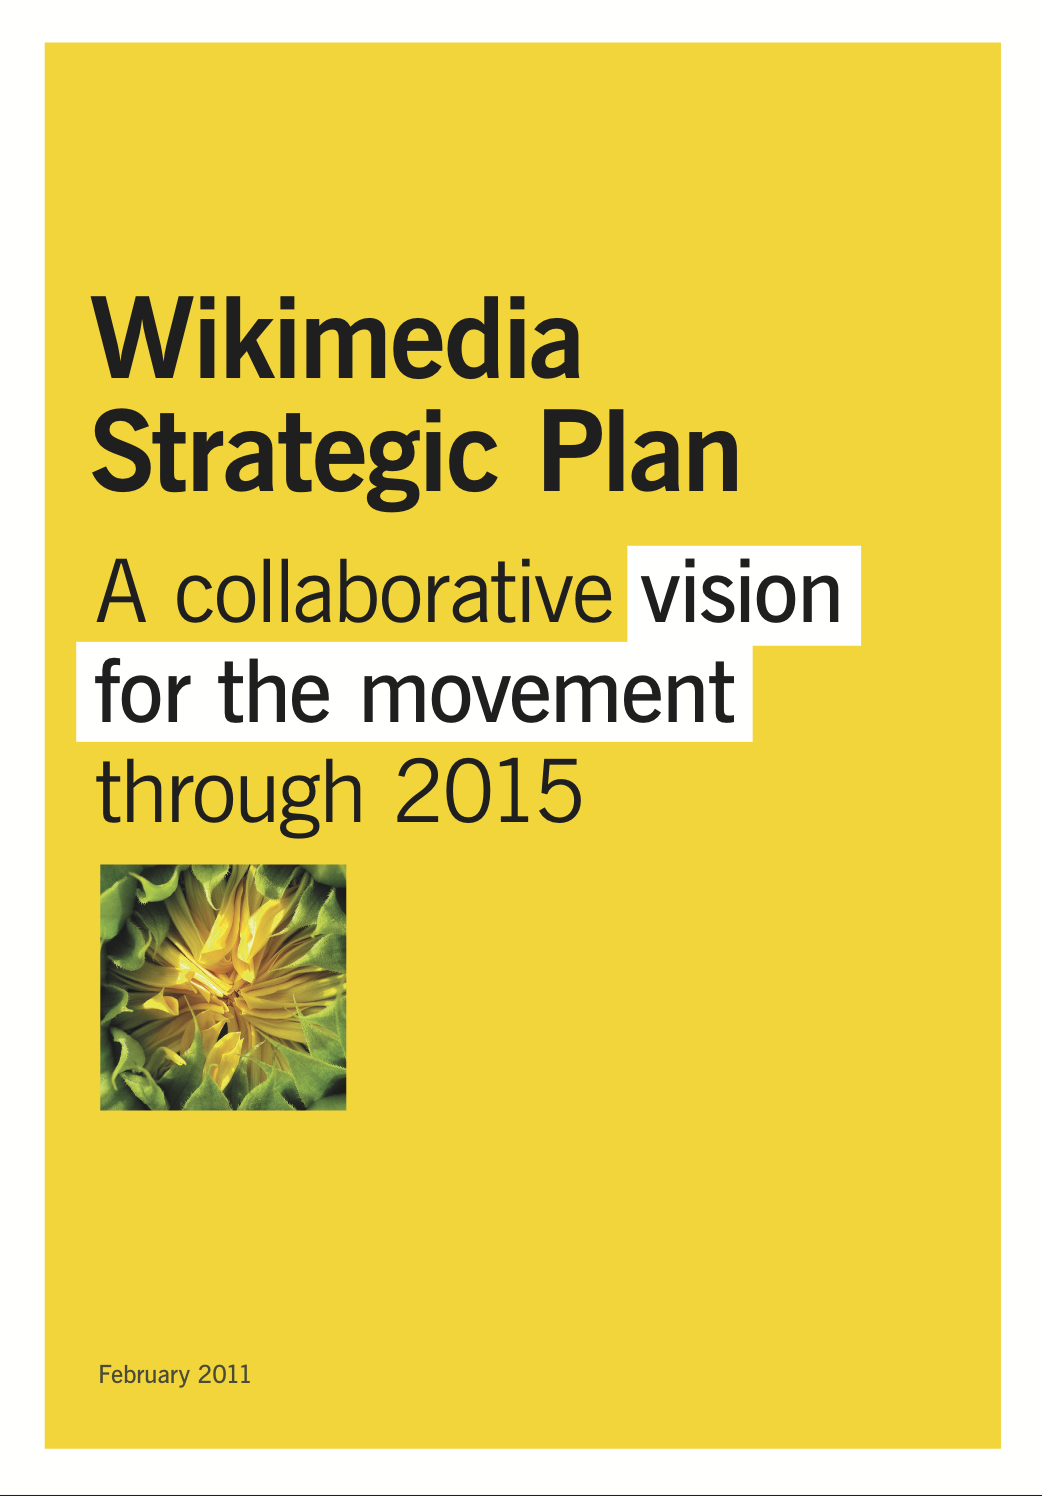 Wikimedia strategic plan